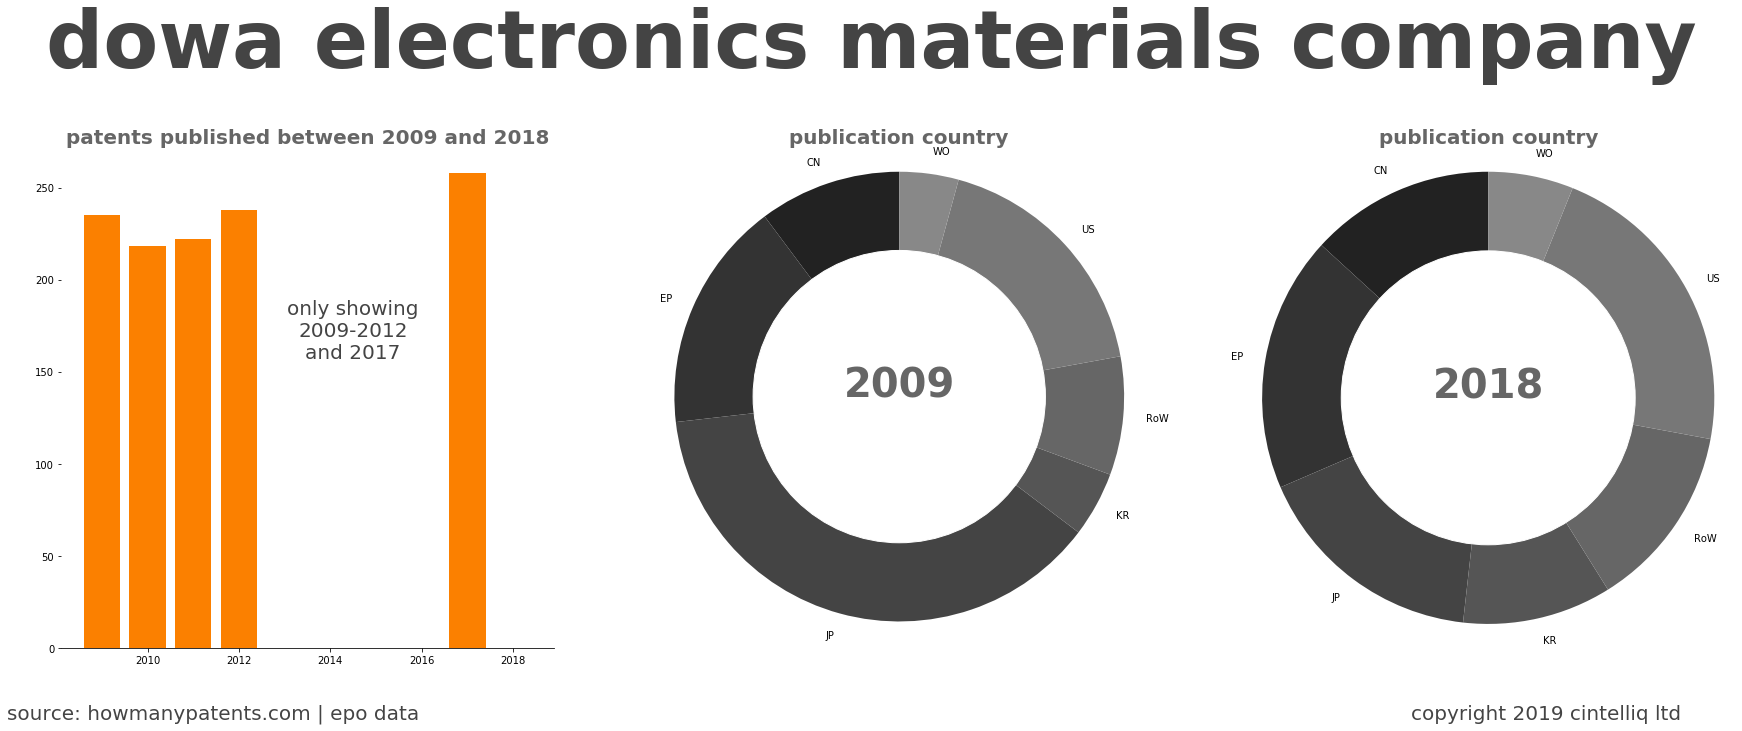 summary of patents for Dowa Electronics Materials Company